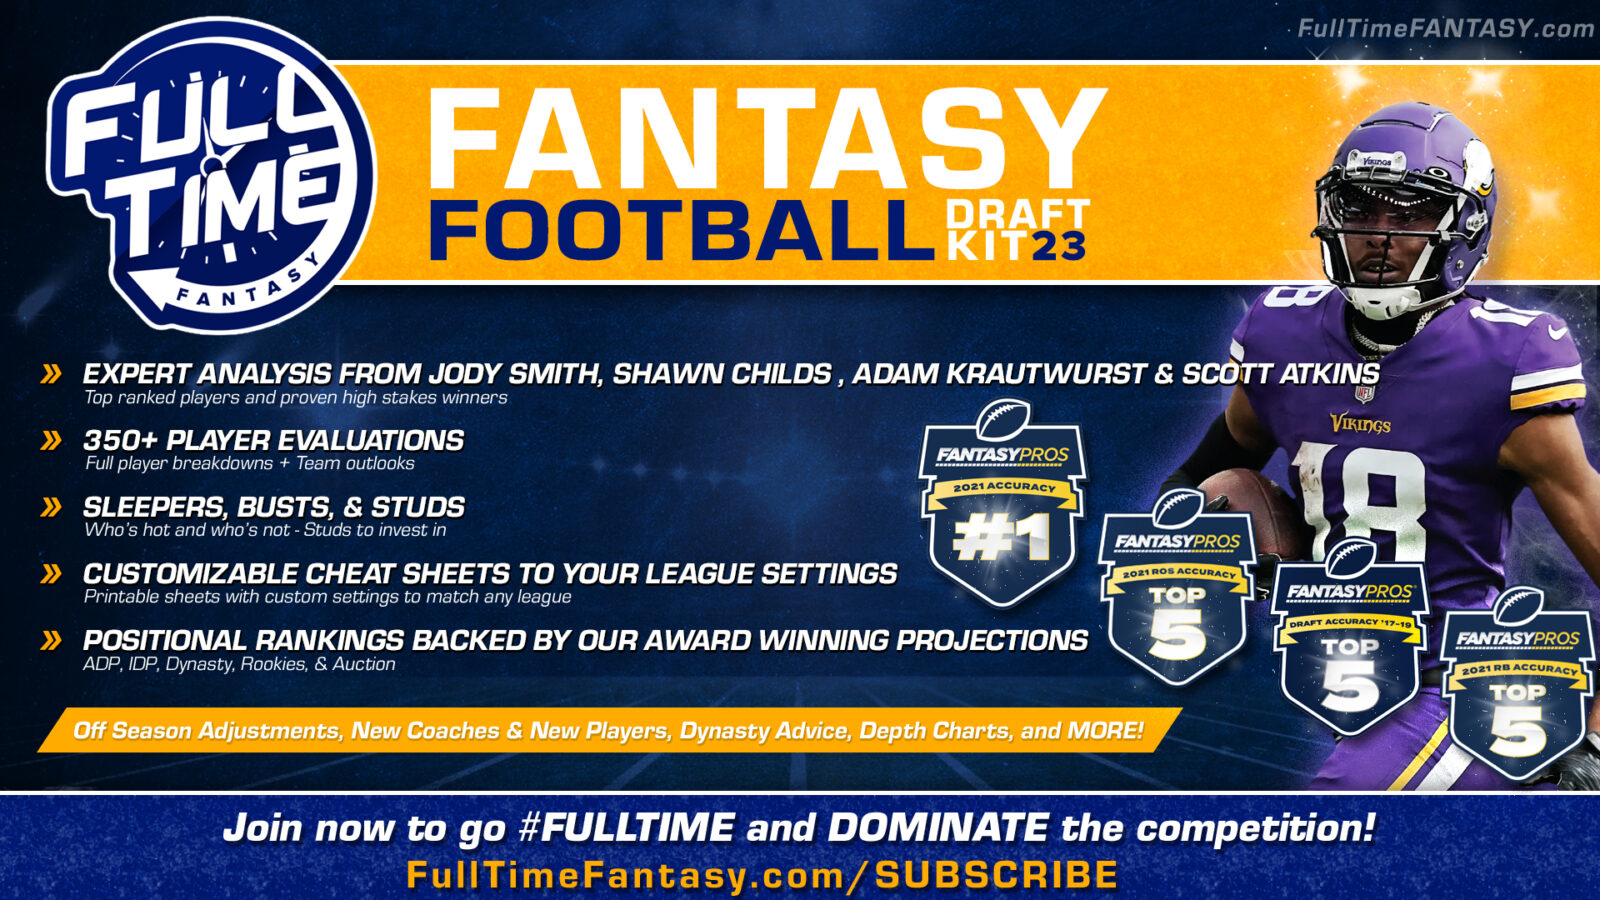 espn fantasy football draft kit printable